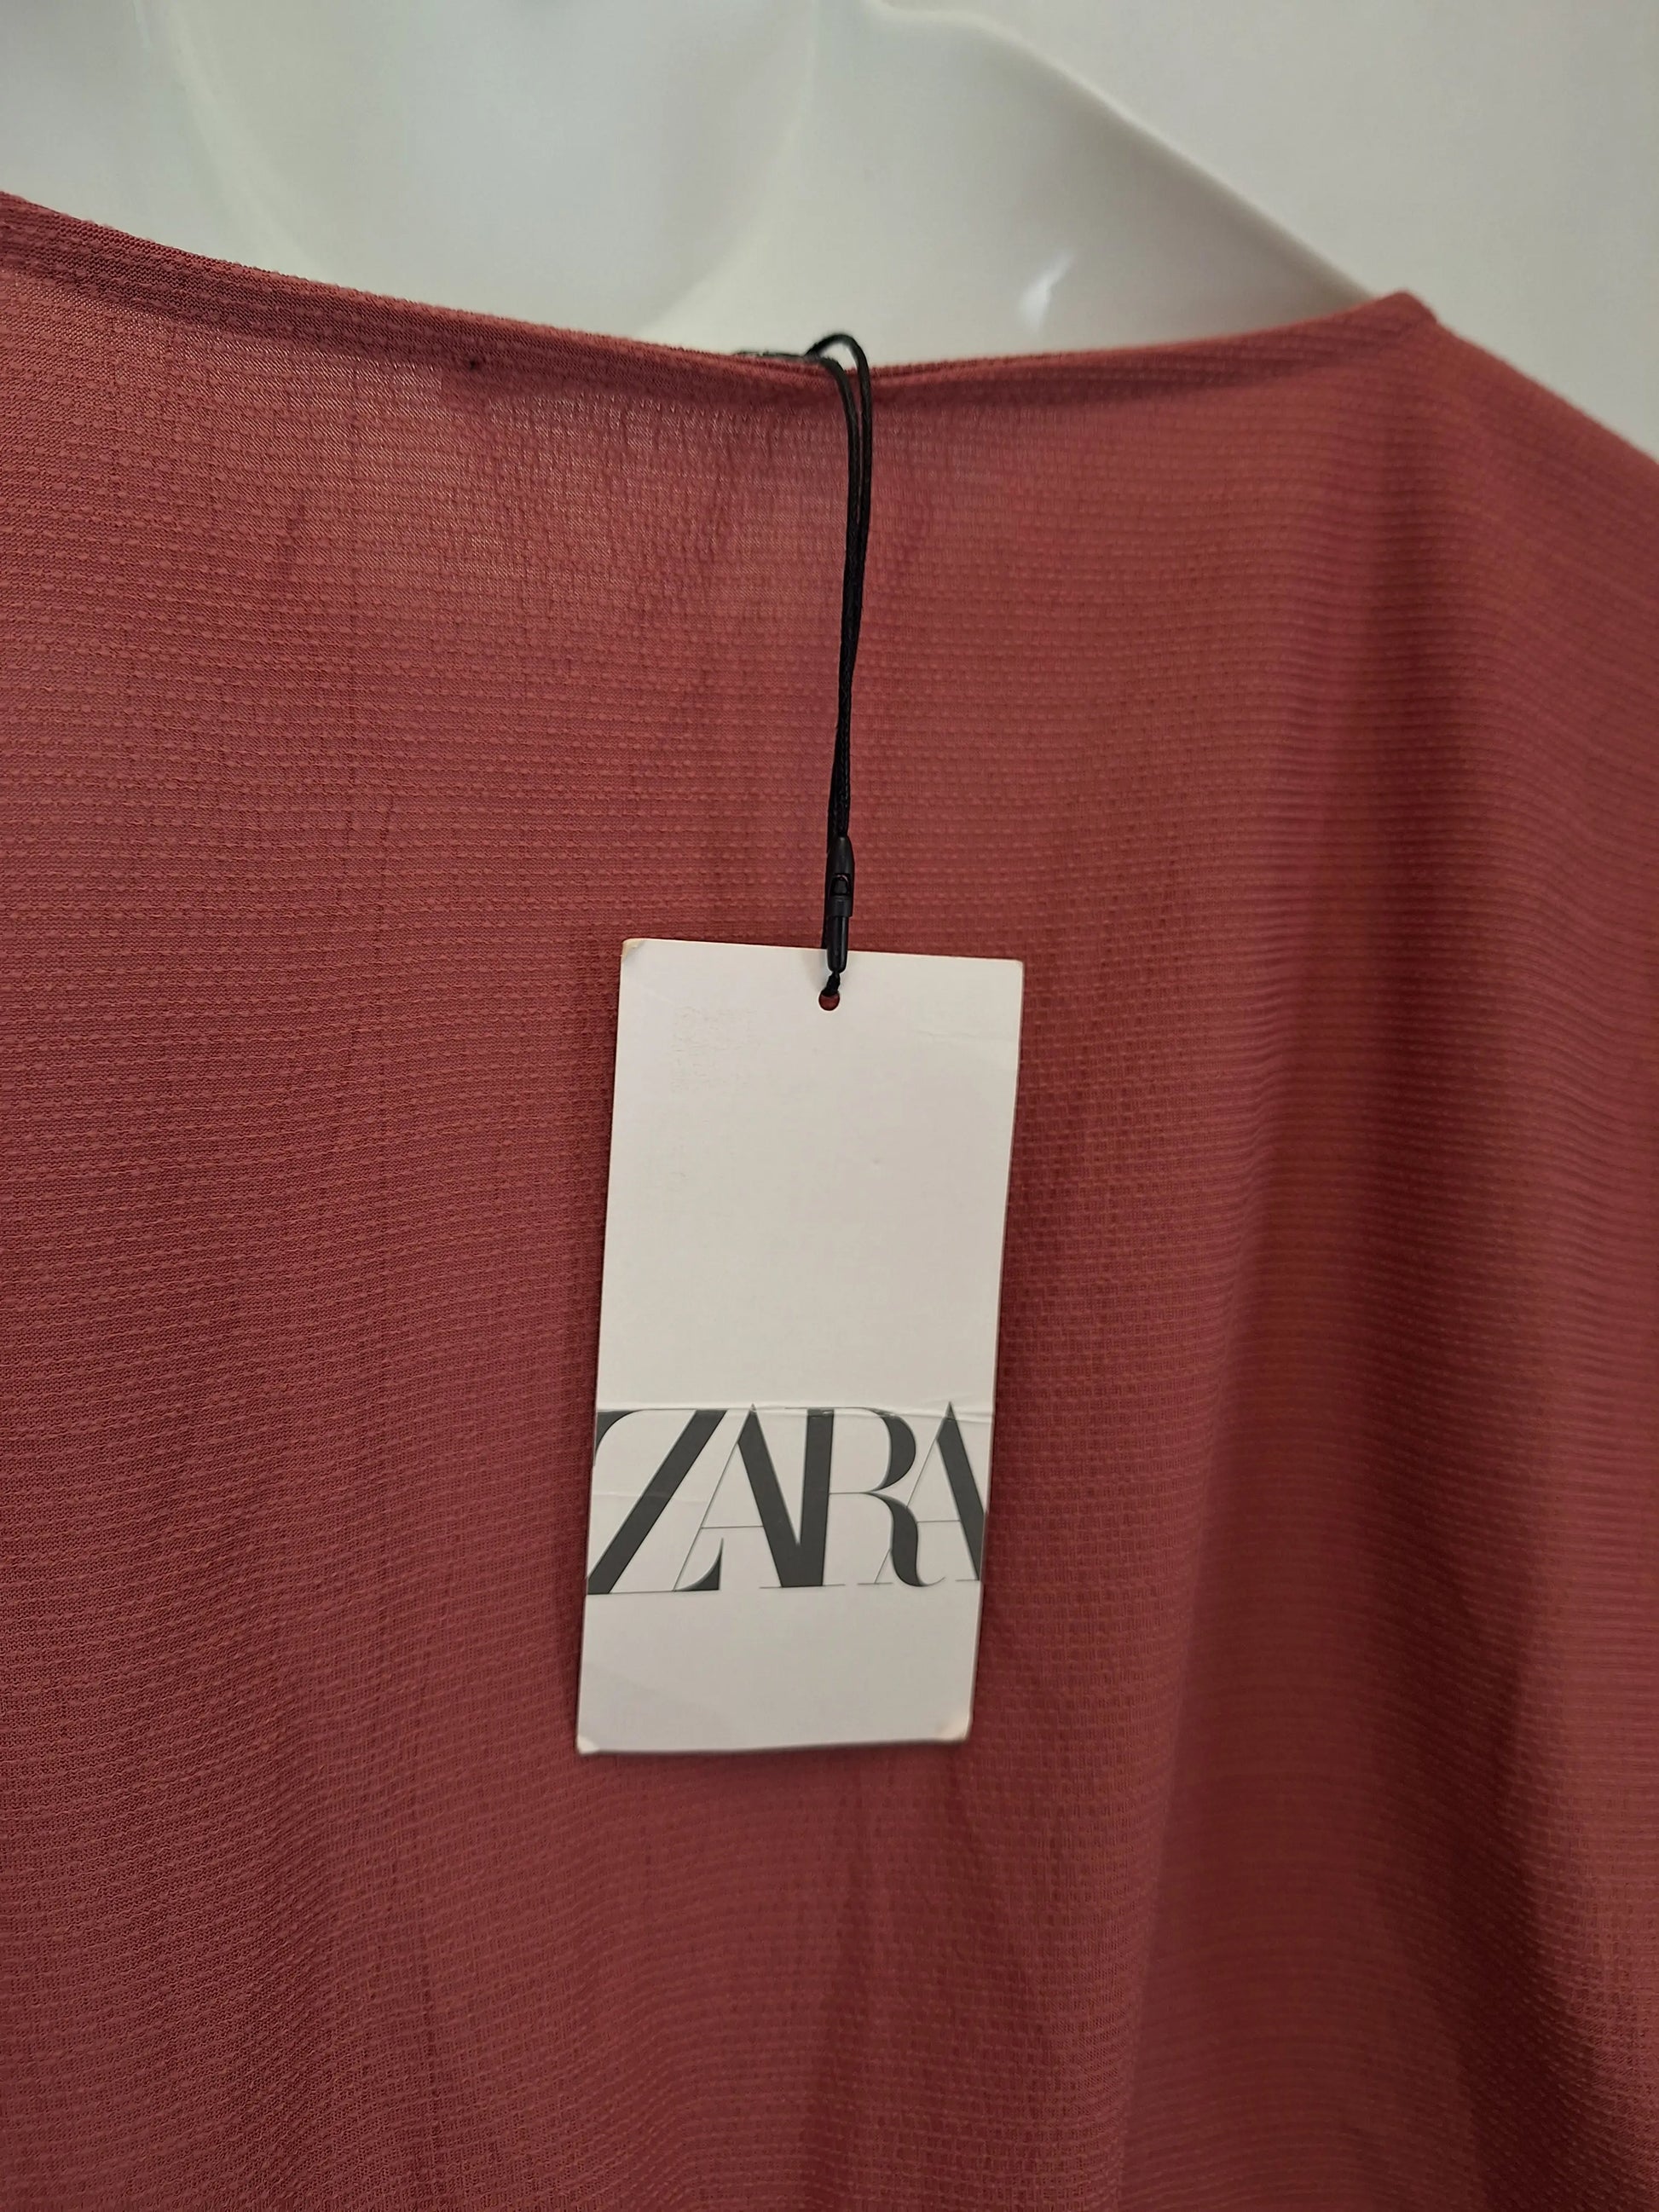 Zara Plunge Neck Wrap Midi Dress Size L by SwapUp-Online Second Hand Store-Online Thrift Store